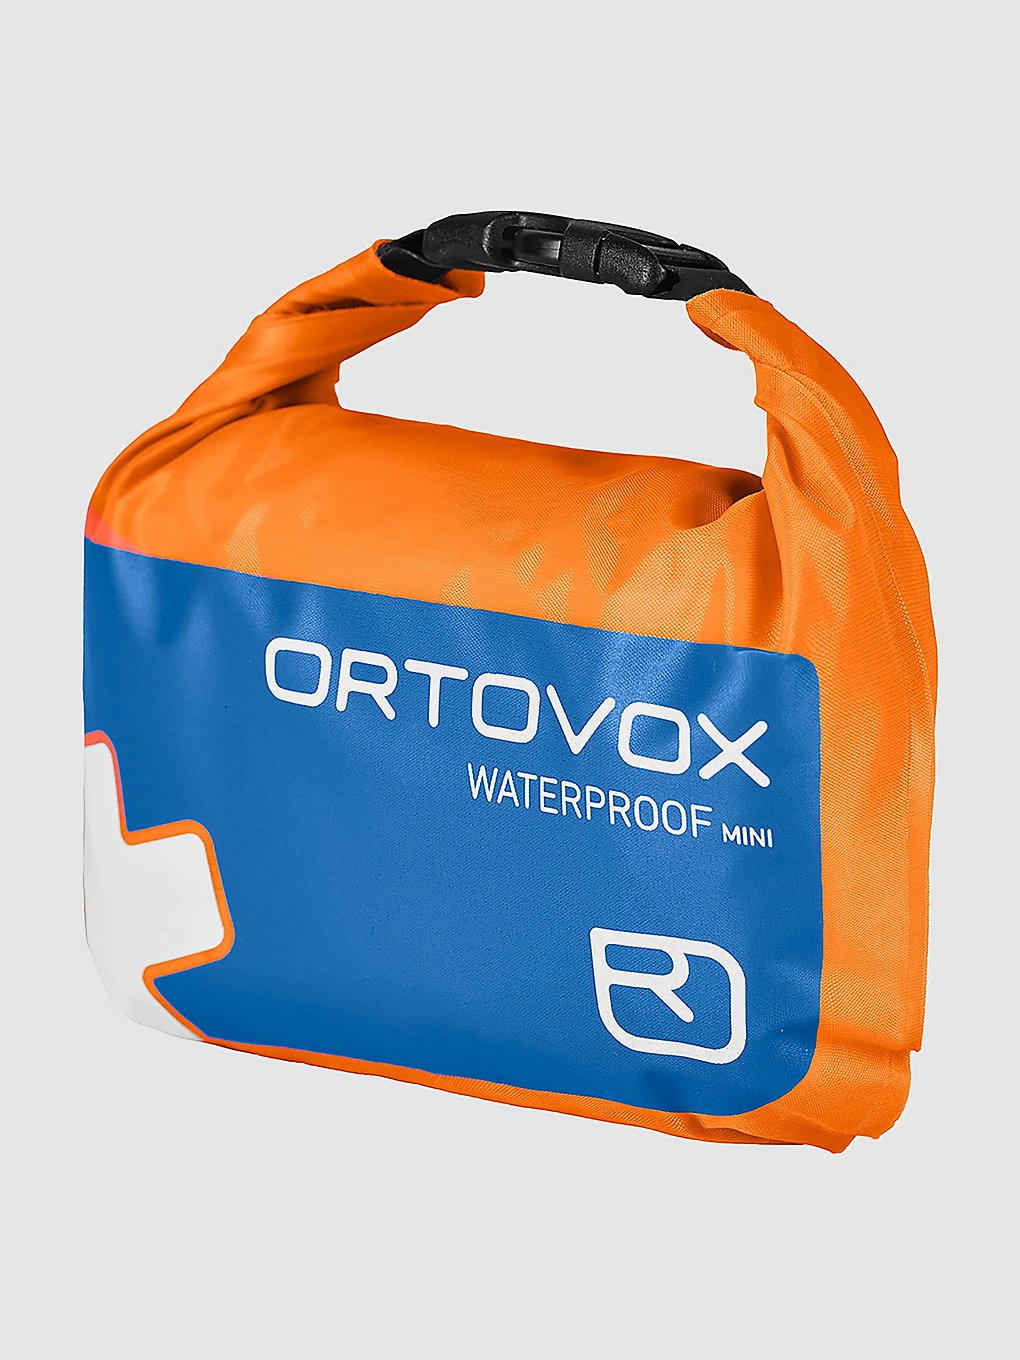 ortovox first aid waterproof mini shocking orange